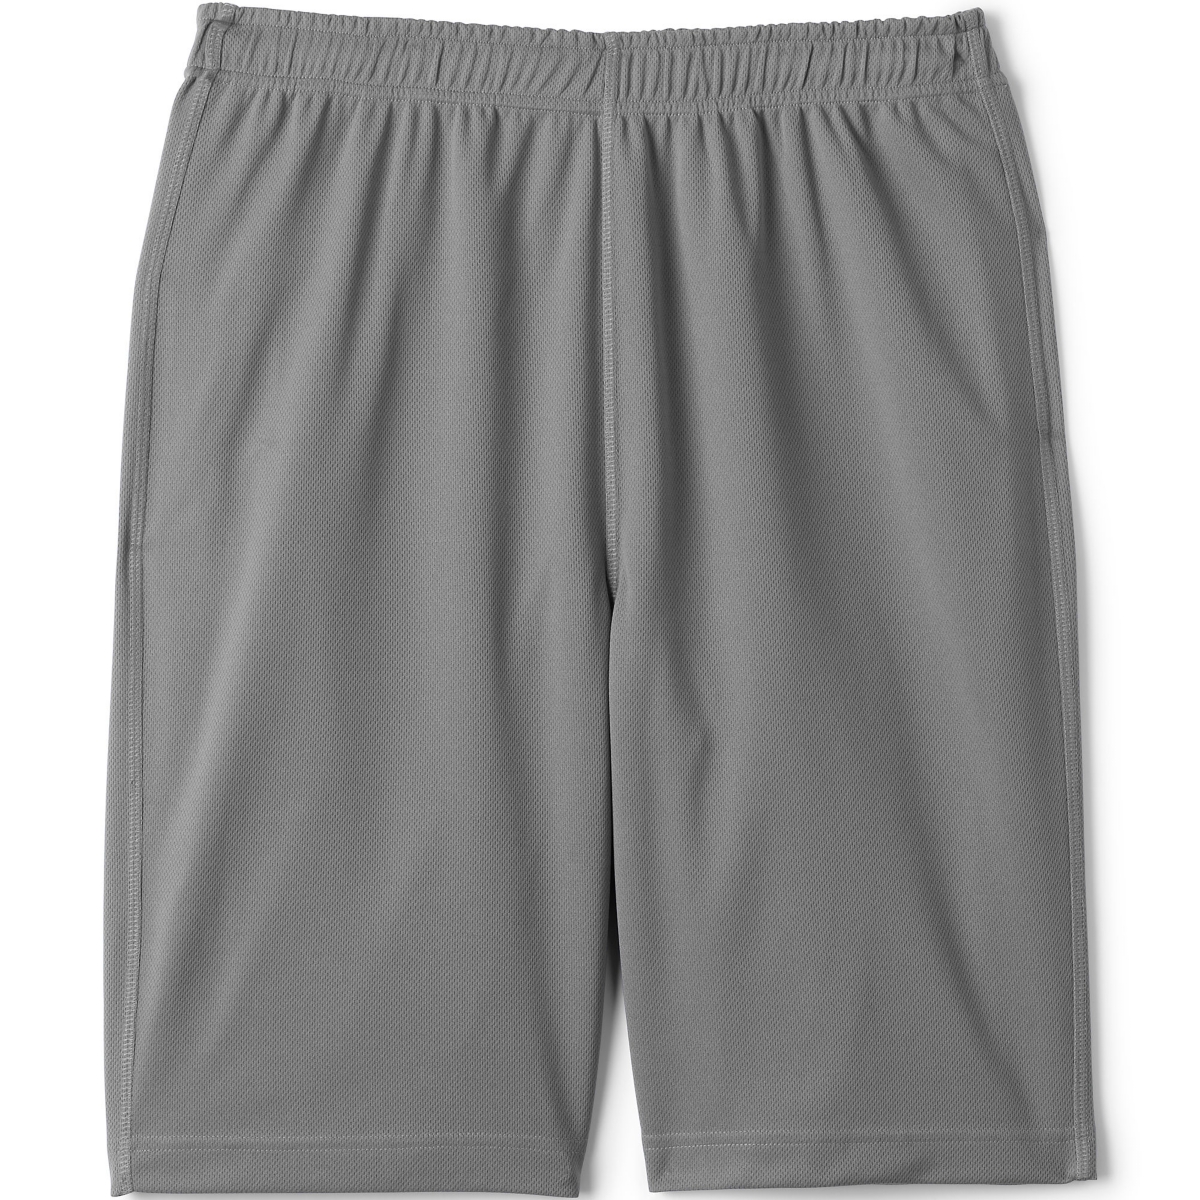 Men's School Uniform Mesh Gym Shorts - Stone gray